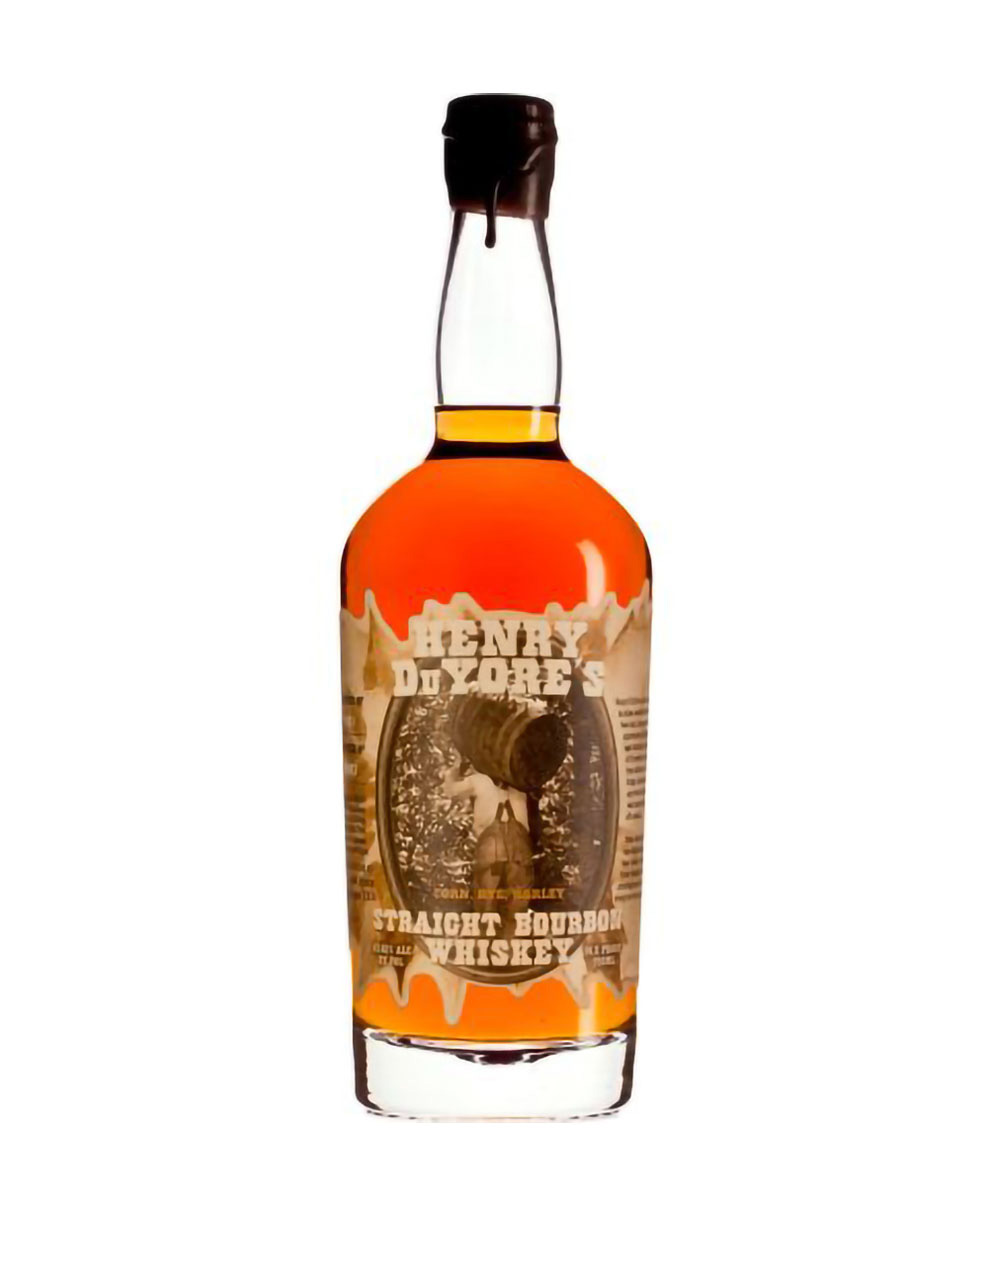 Henry DuYore's Straight Bourbon Whiskey